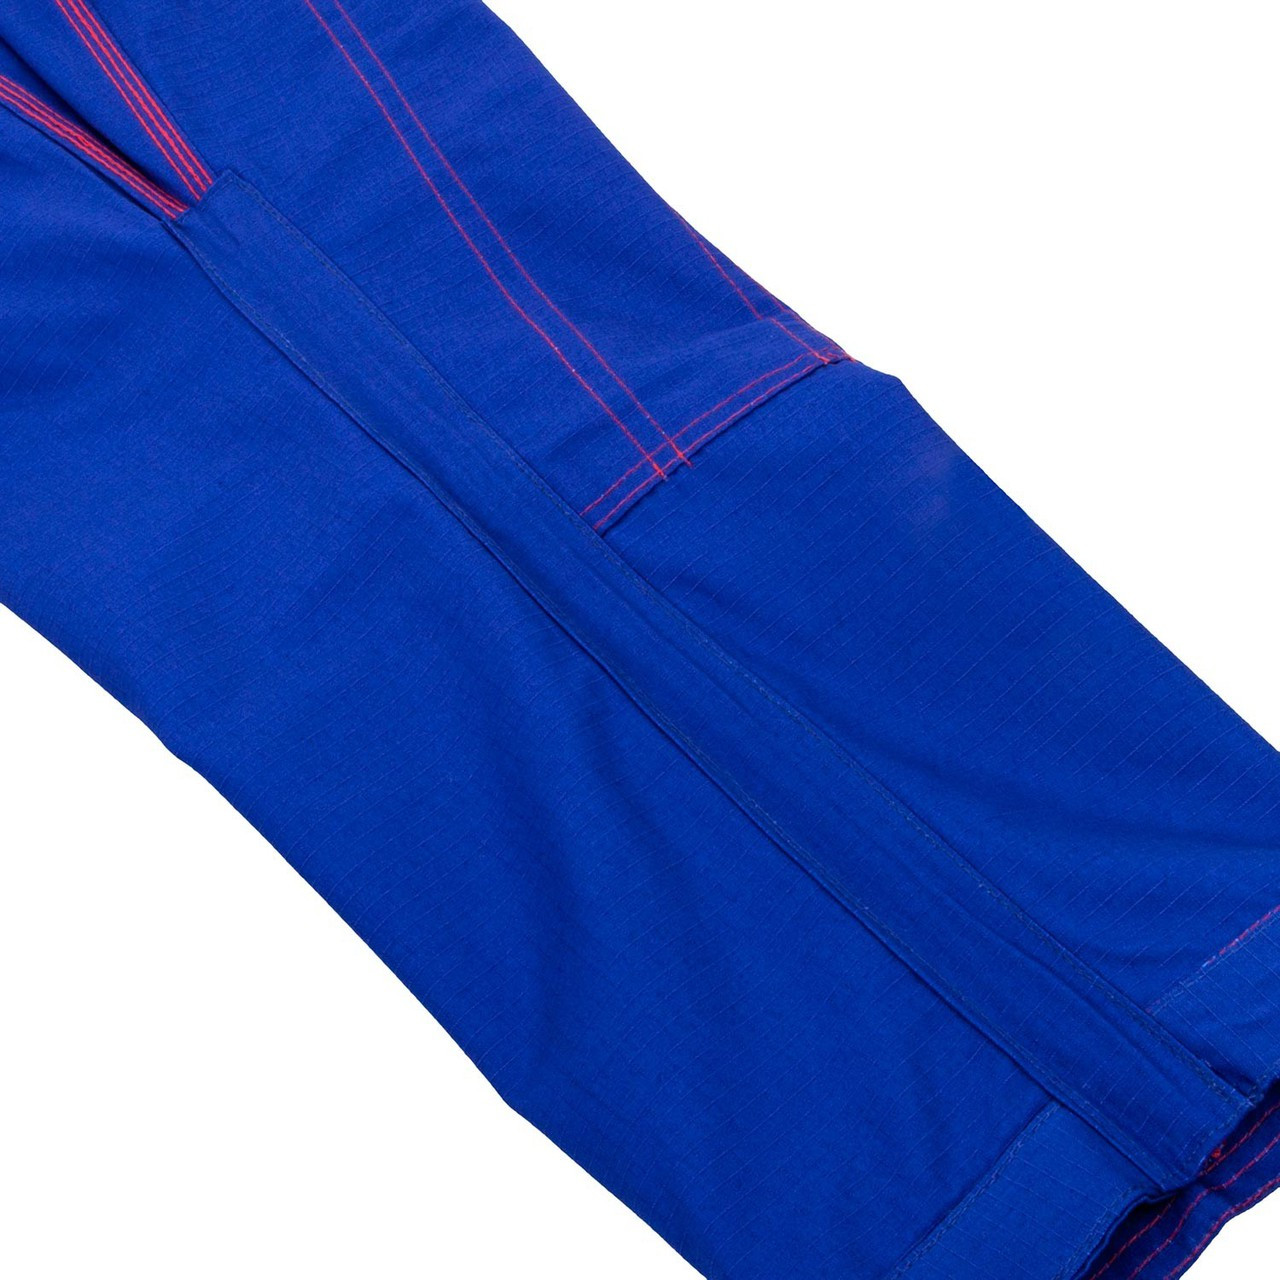 inside the gi pants Venum Elite Light BJJ GI in Blue is now available at www.thejiujitsushop.com

Enjoy Free Shipping from The Jiu Jitsu Shop today! 